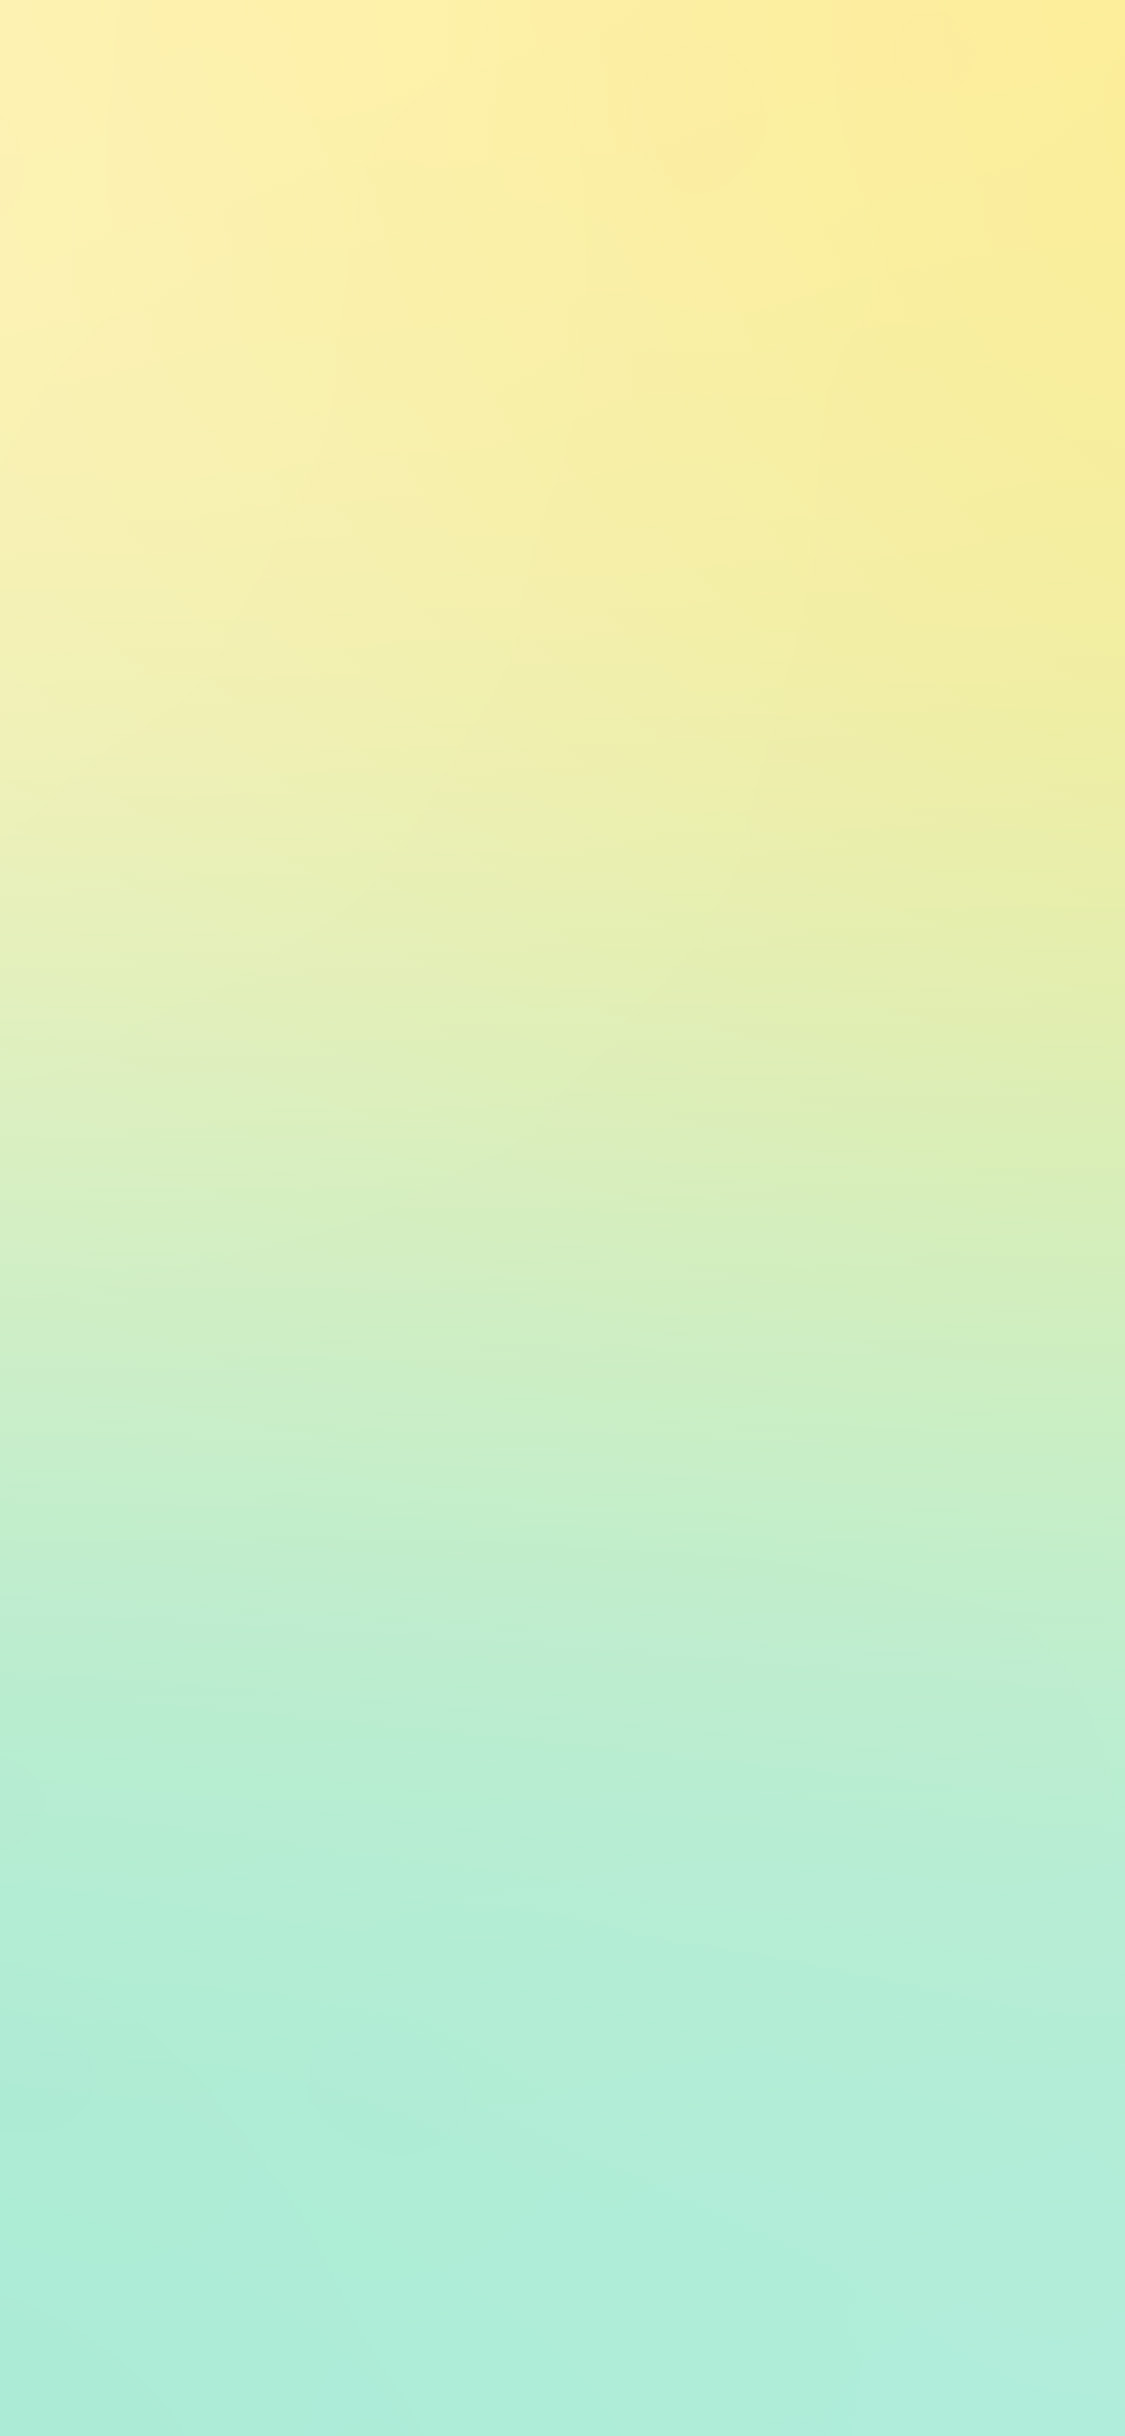 iPhone X wallpaper. yellow soft pastel blur gradation